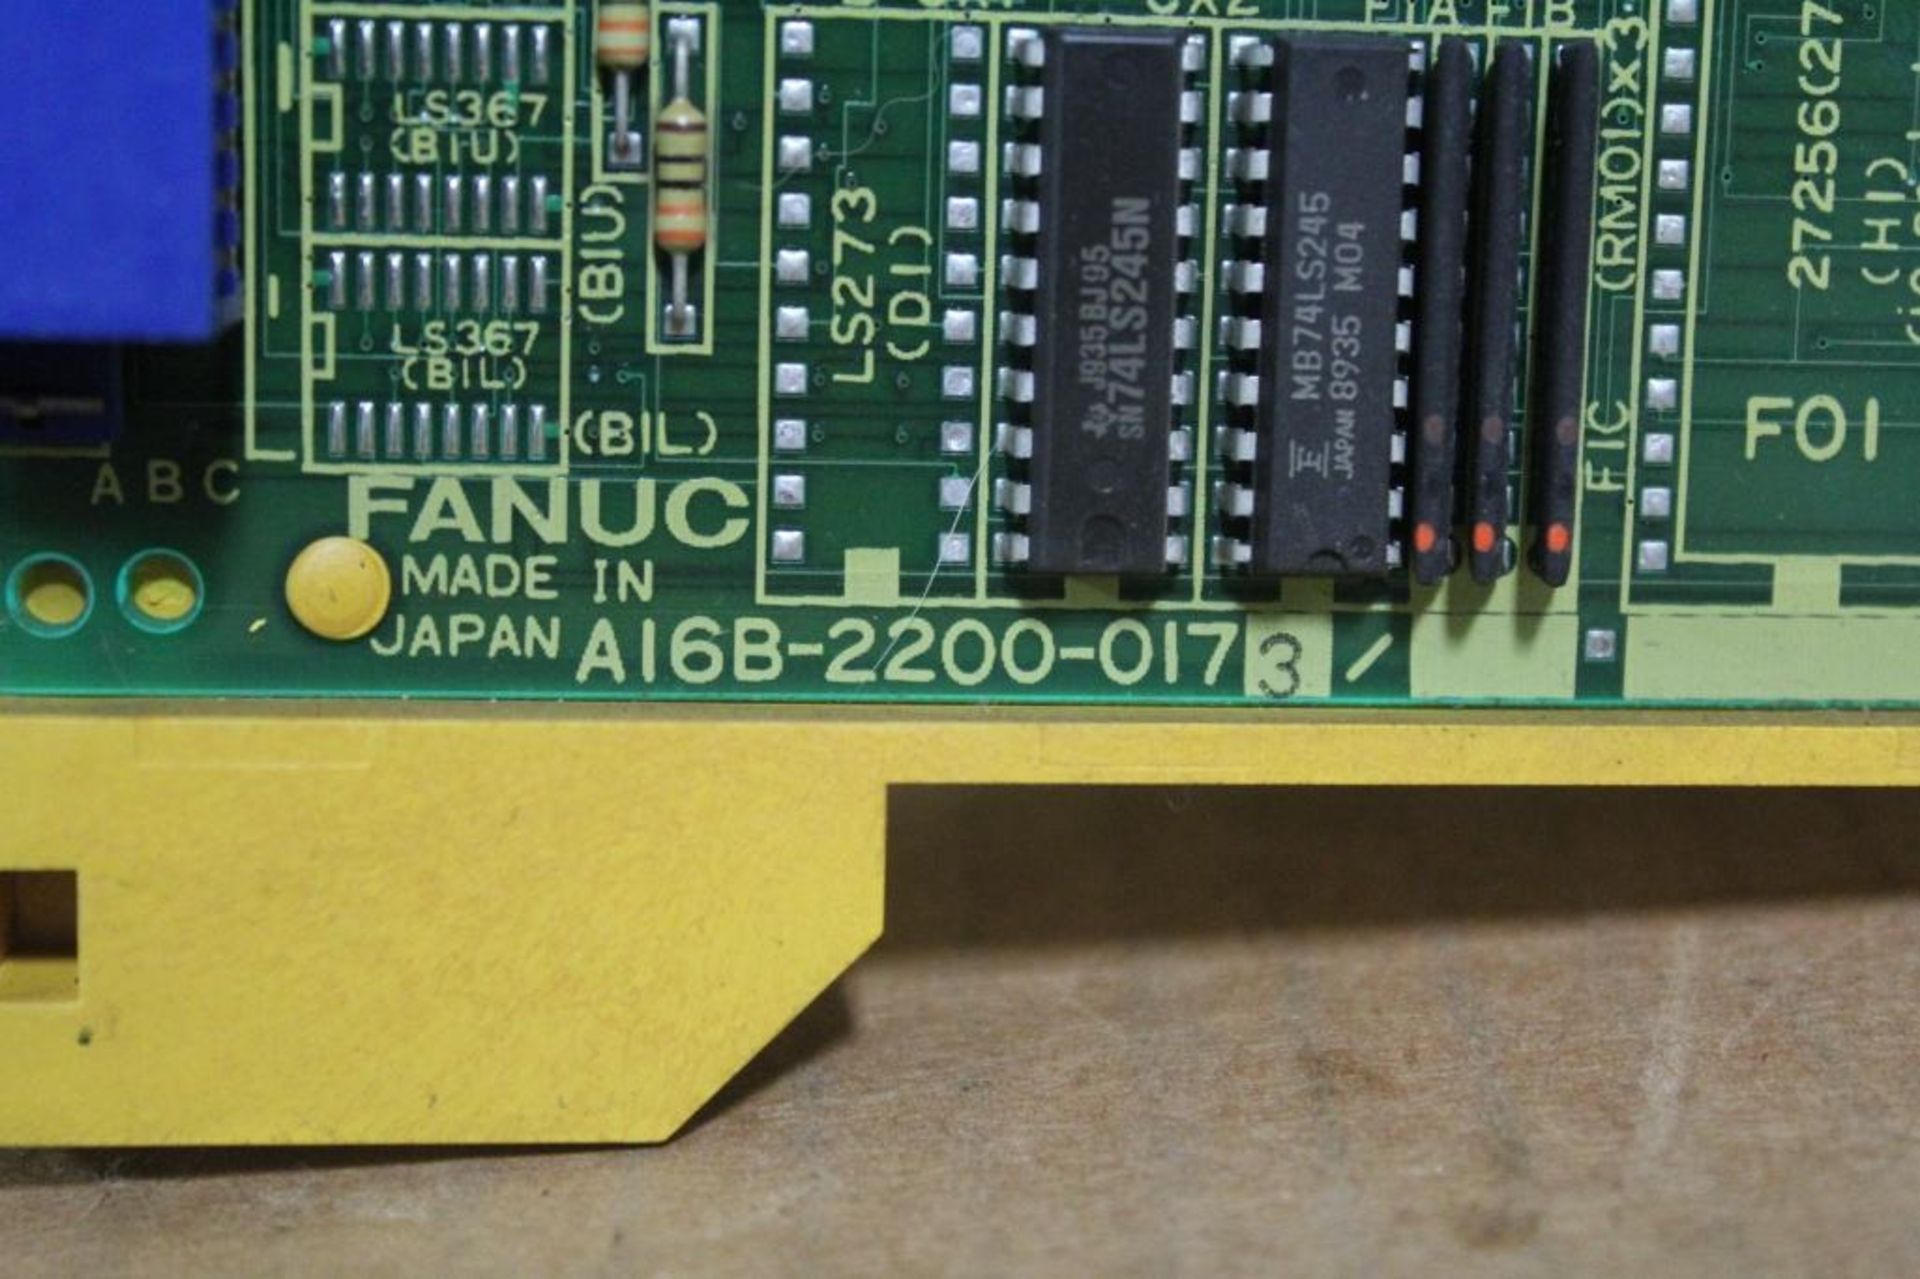 Fanuc A16B-2200-0173 Serial Port Board - Image 2 of 3